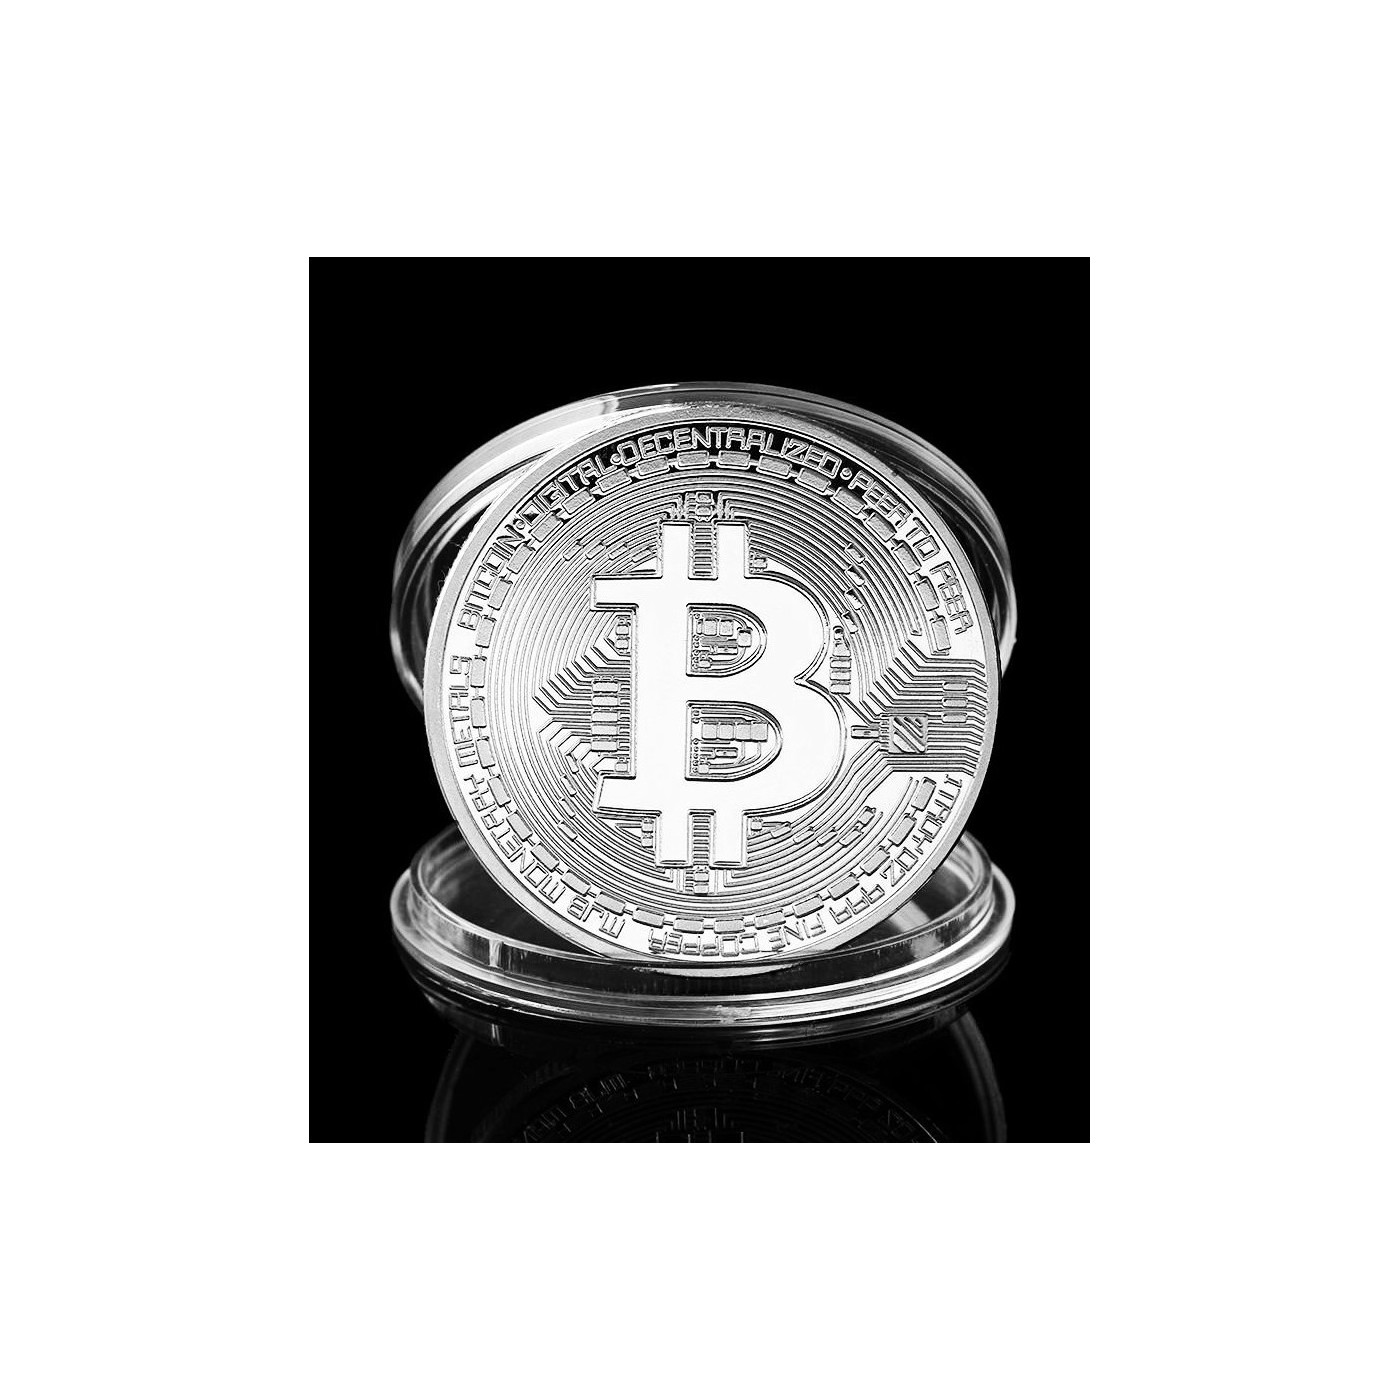 Moneda Bitcoin, color plata, en caja